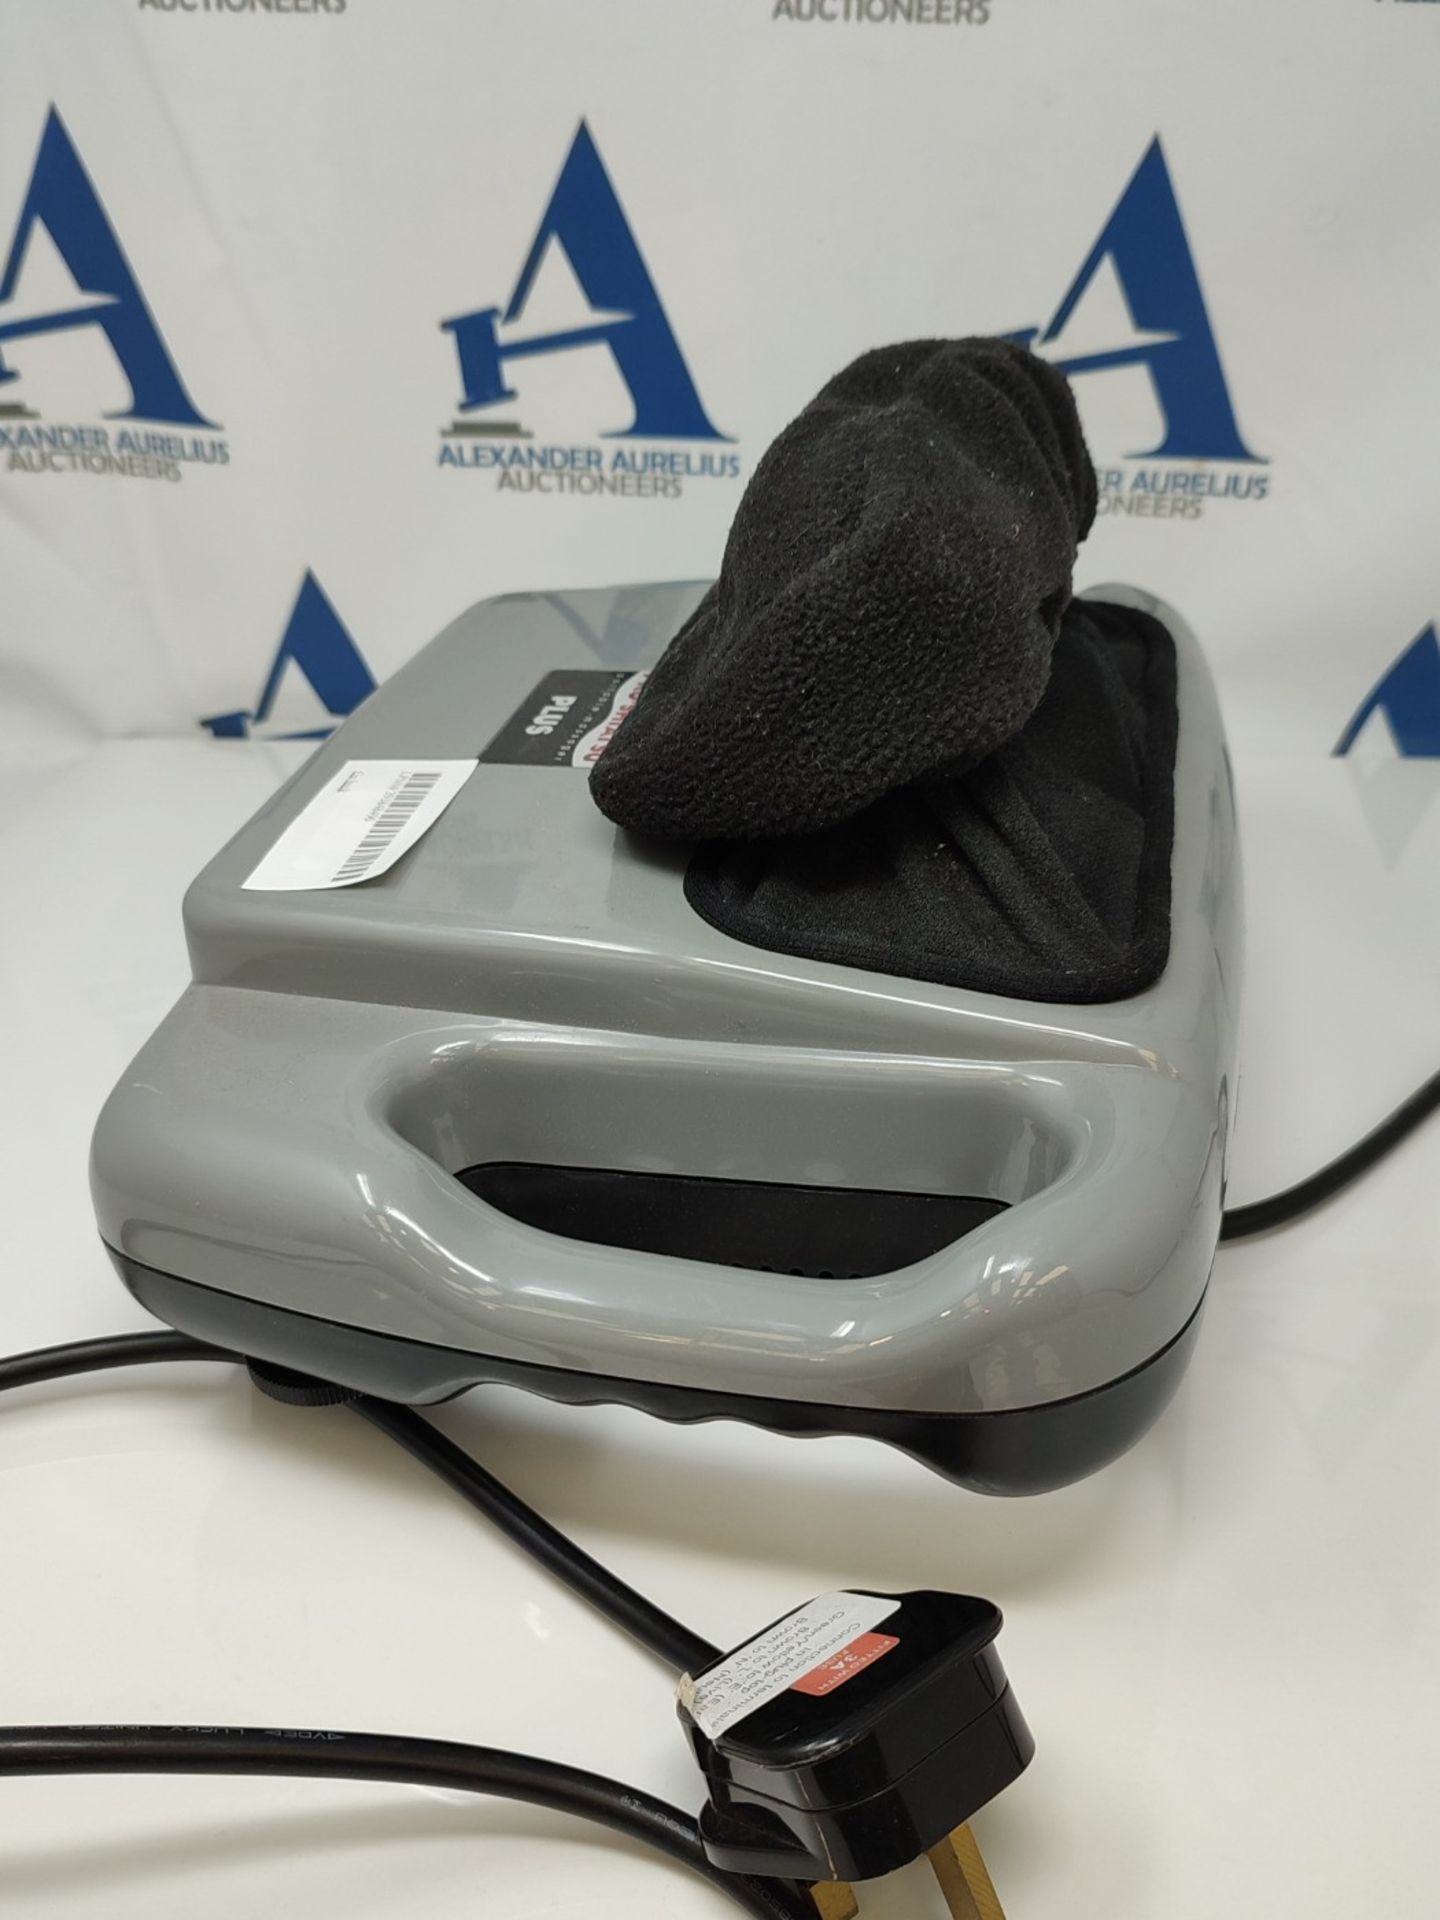 RRP £75.00 Pro shiatsu portable massager plus adjustable speeds tension pressure arms - Image 3 of 3